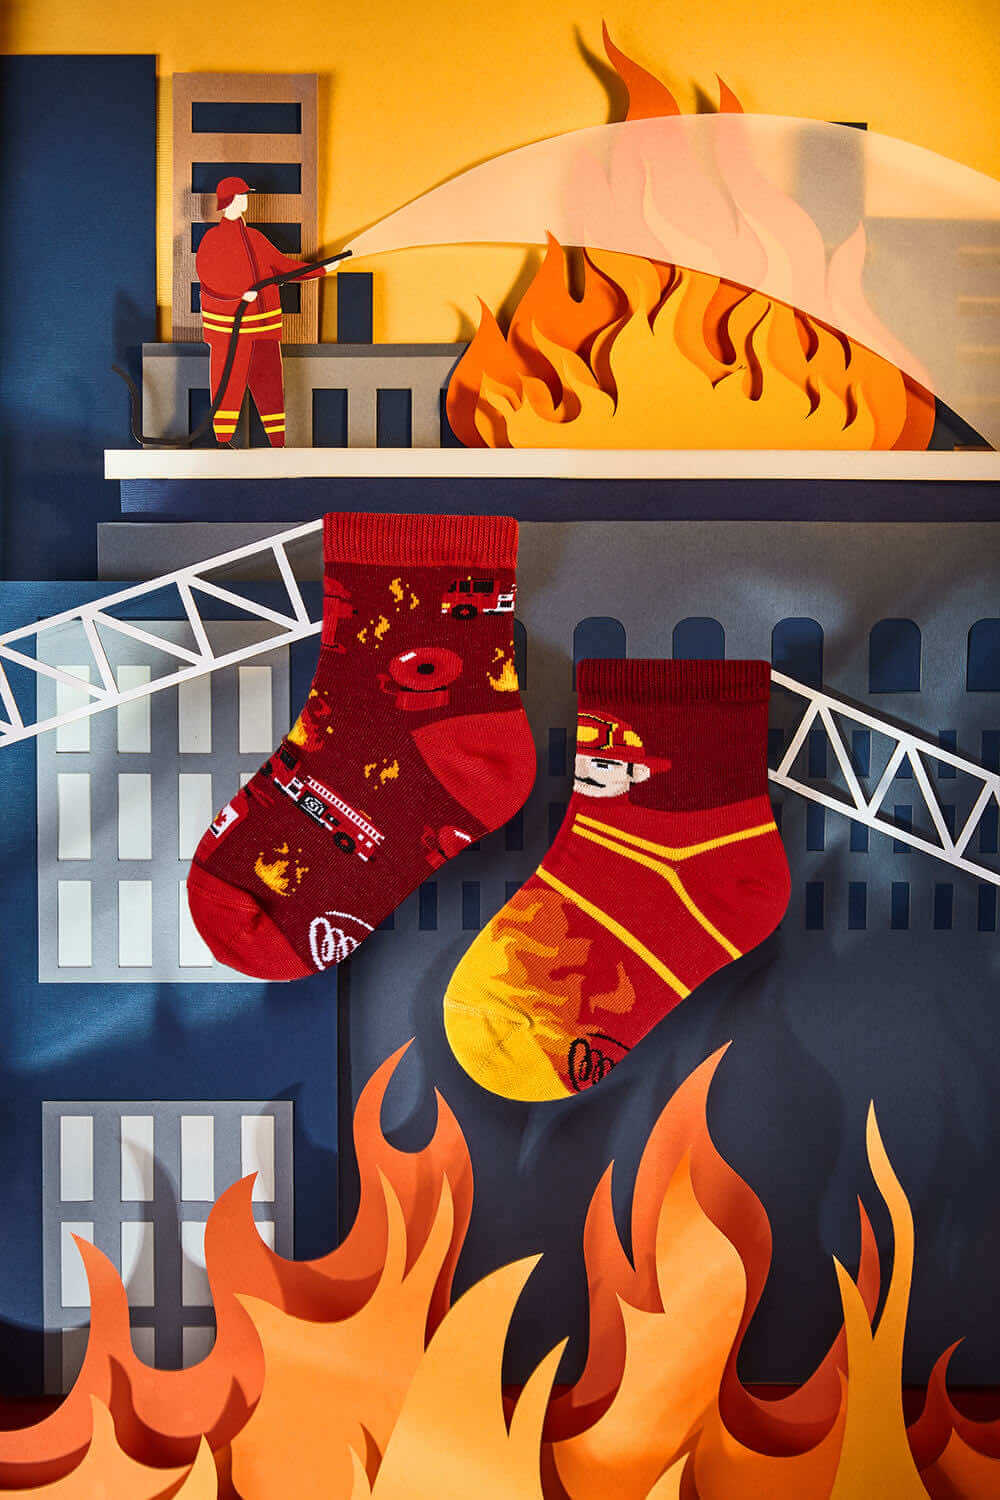 THE FIREMAN KIDS - Firefighter kids socks